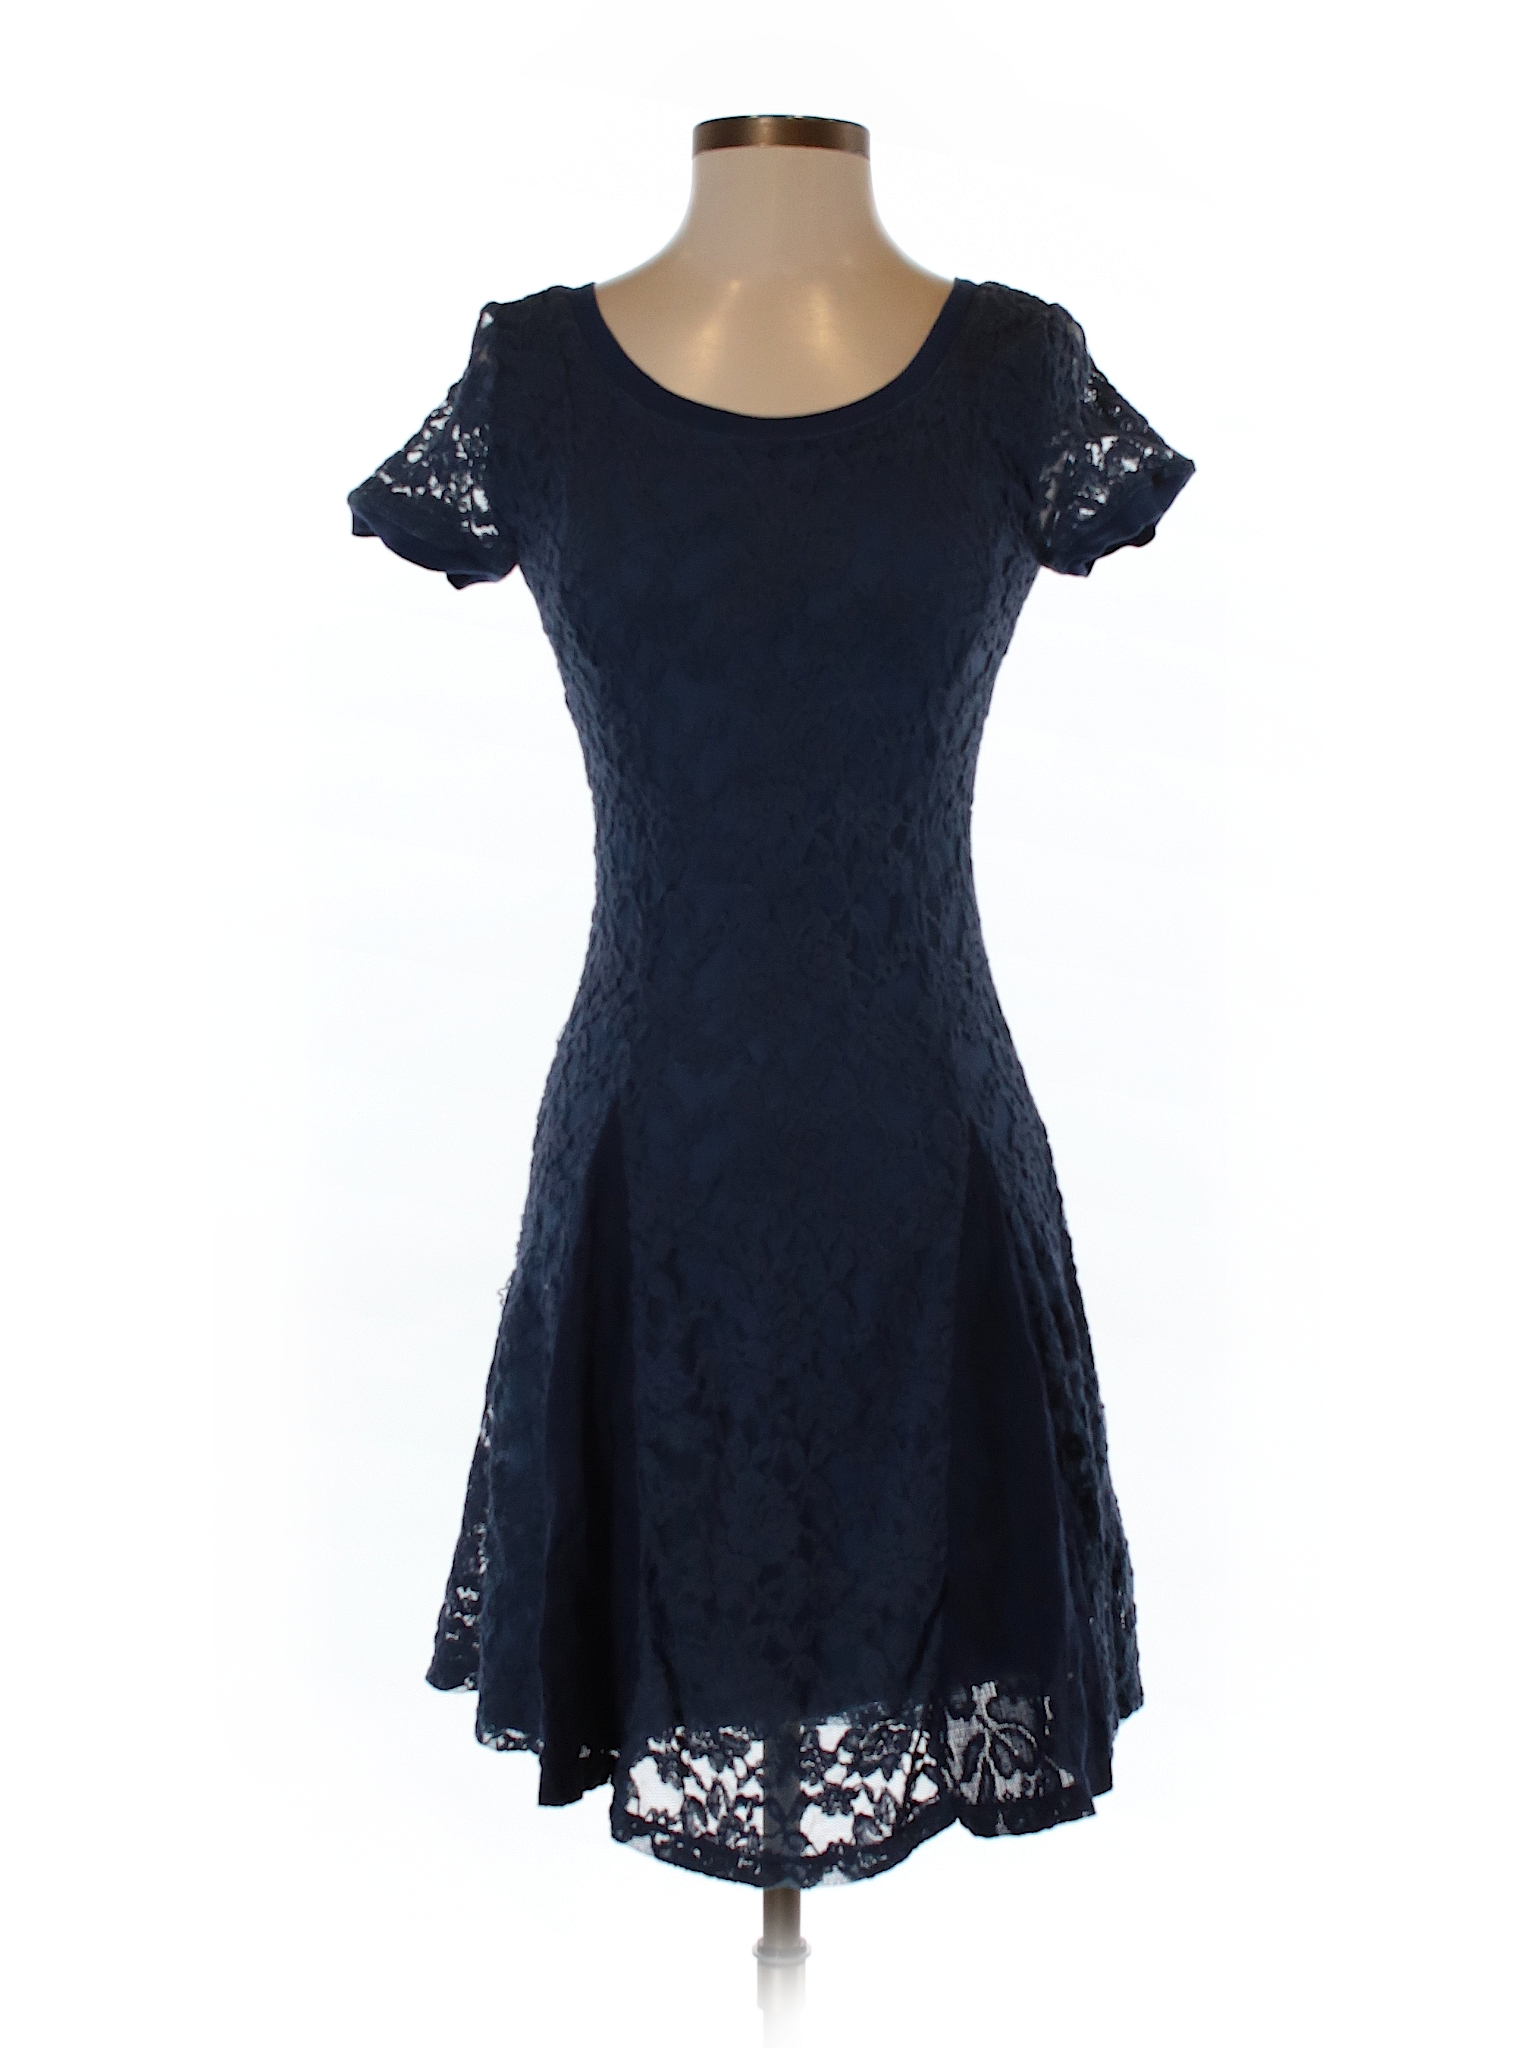 Rubbish Lace Dark Blue Casual Dress Size S - 70% off | thredUP